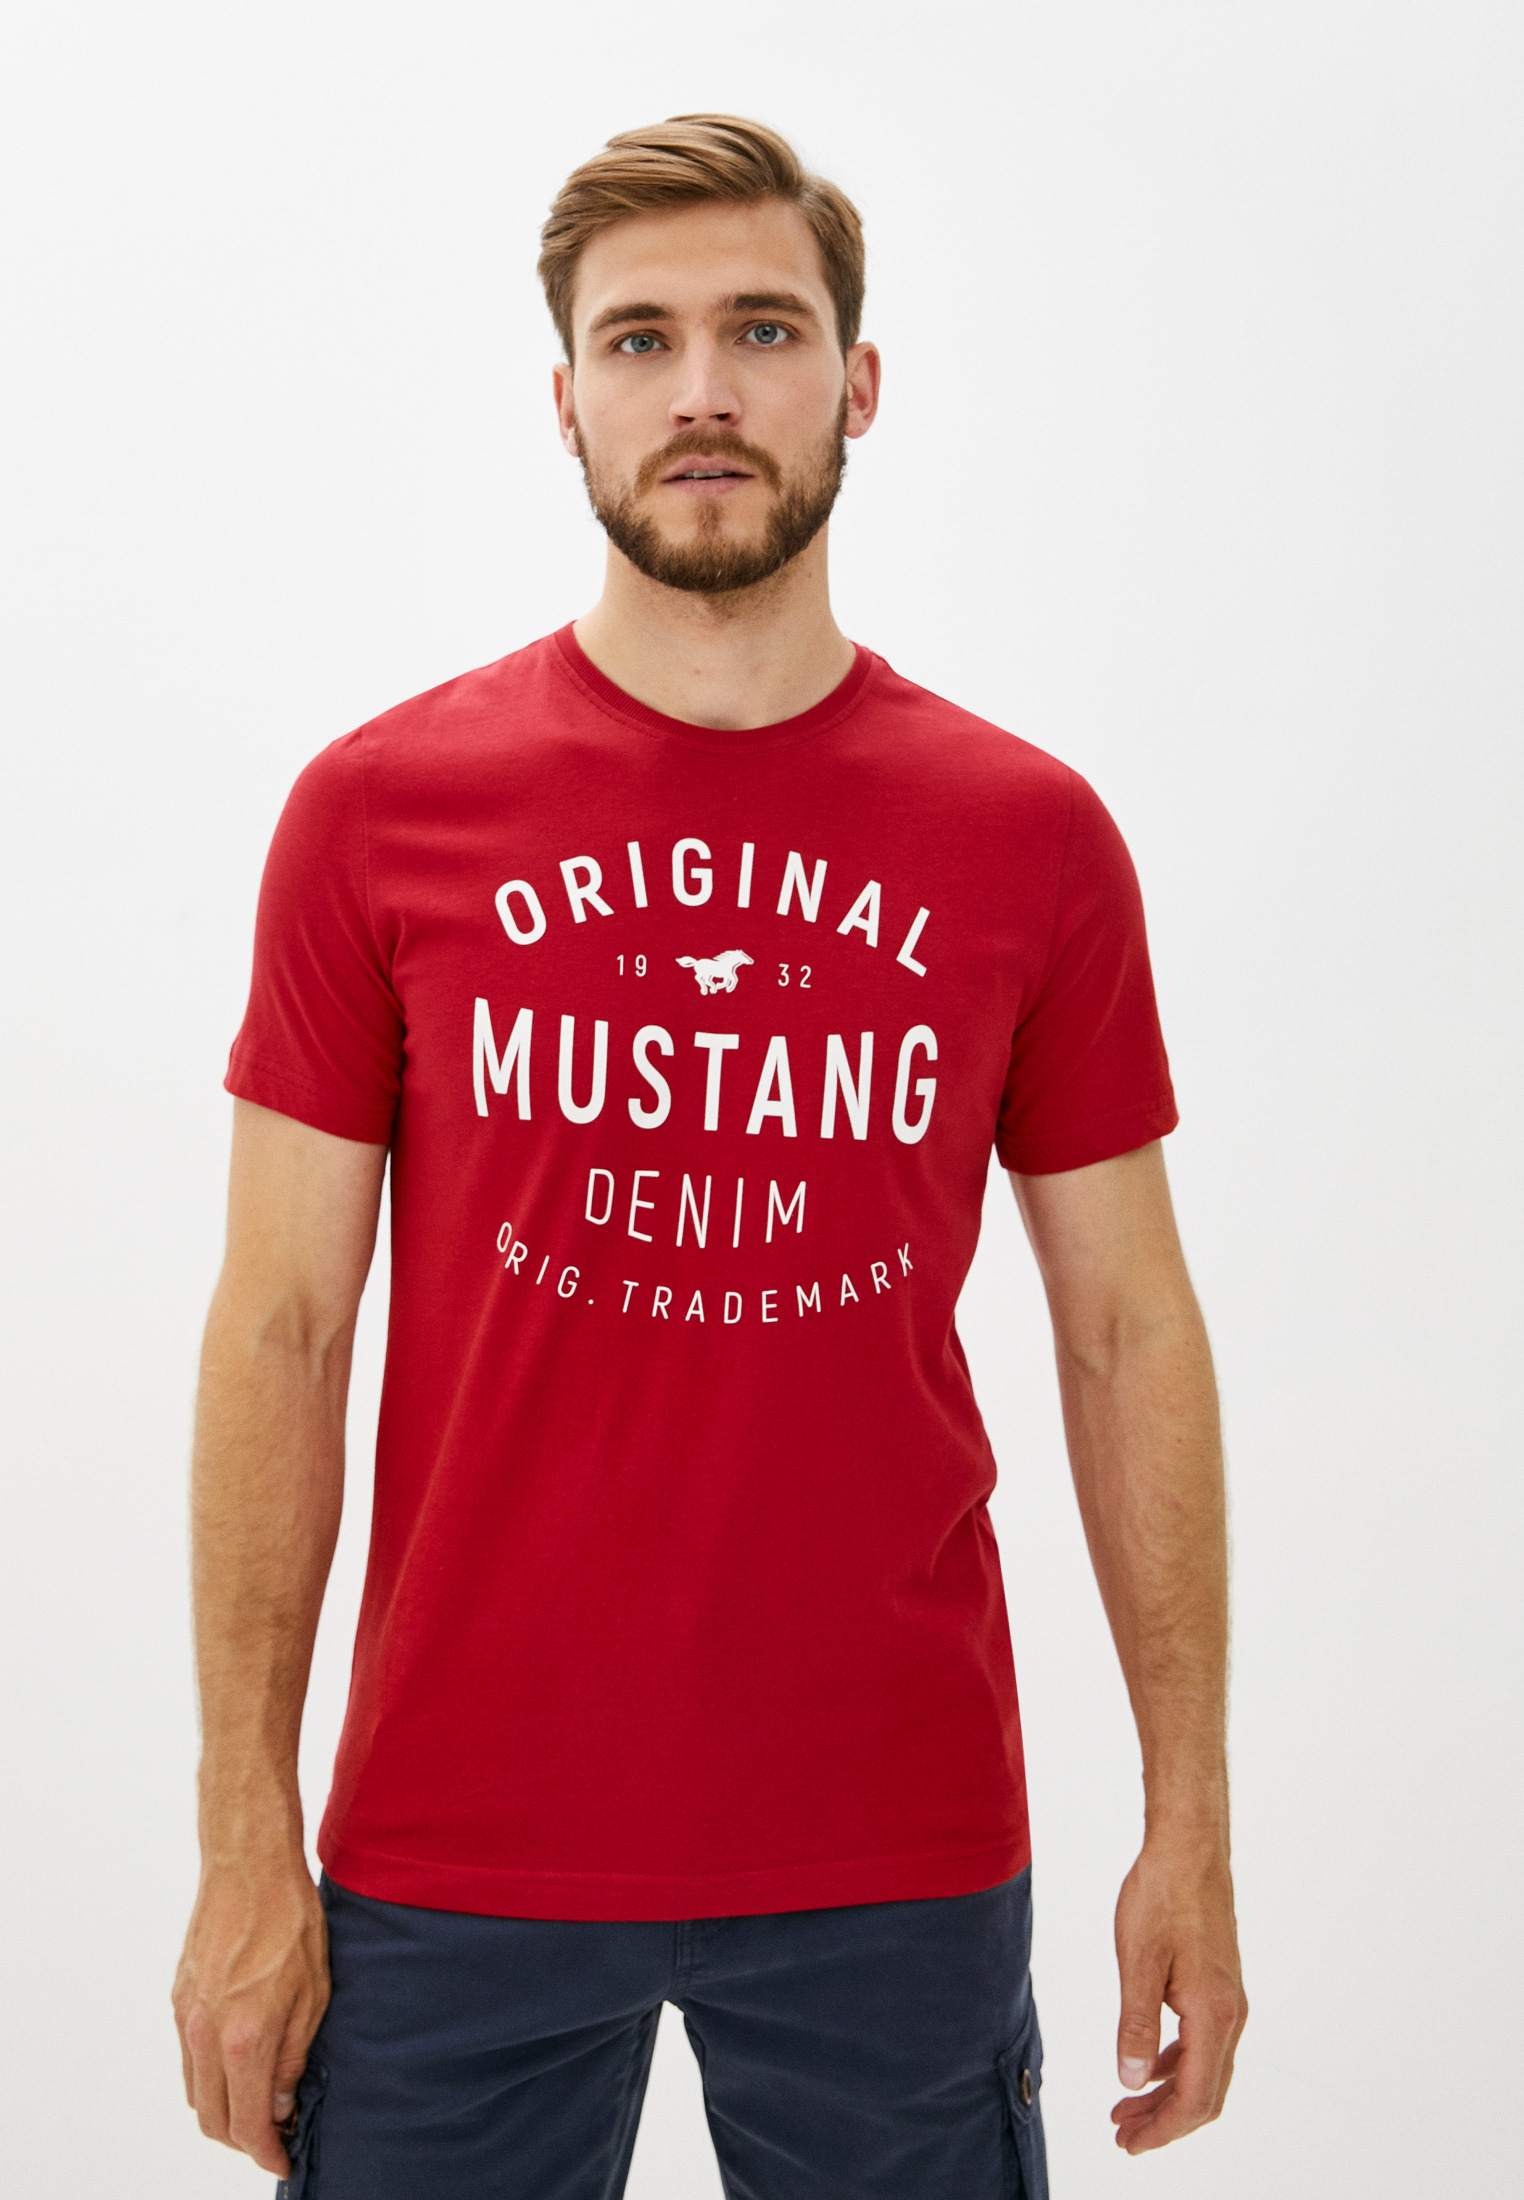 Красный алекс. Футболка Mustang. Красная футболка Мустанг. Мустанг красная футболка мужская. Mustang майка.